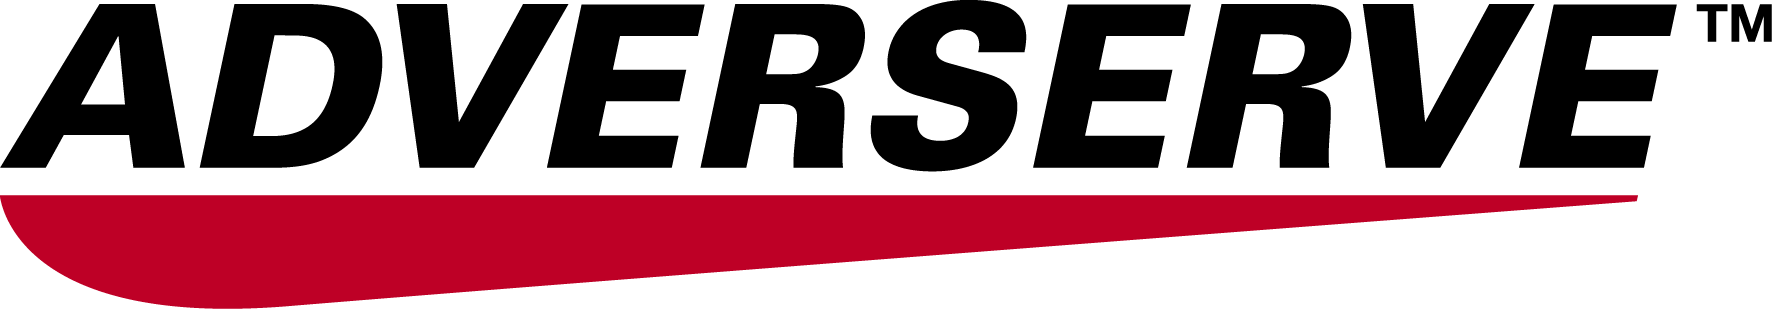 Adverserve Logo